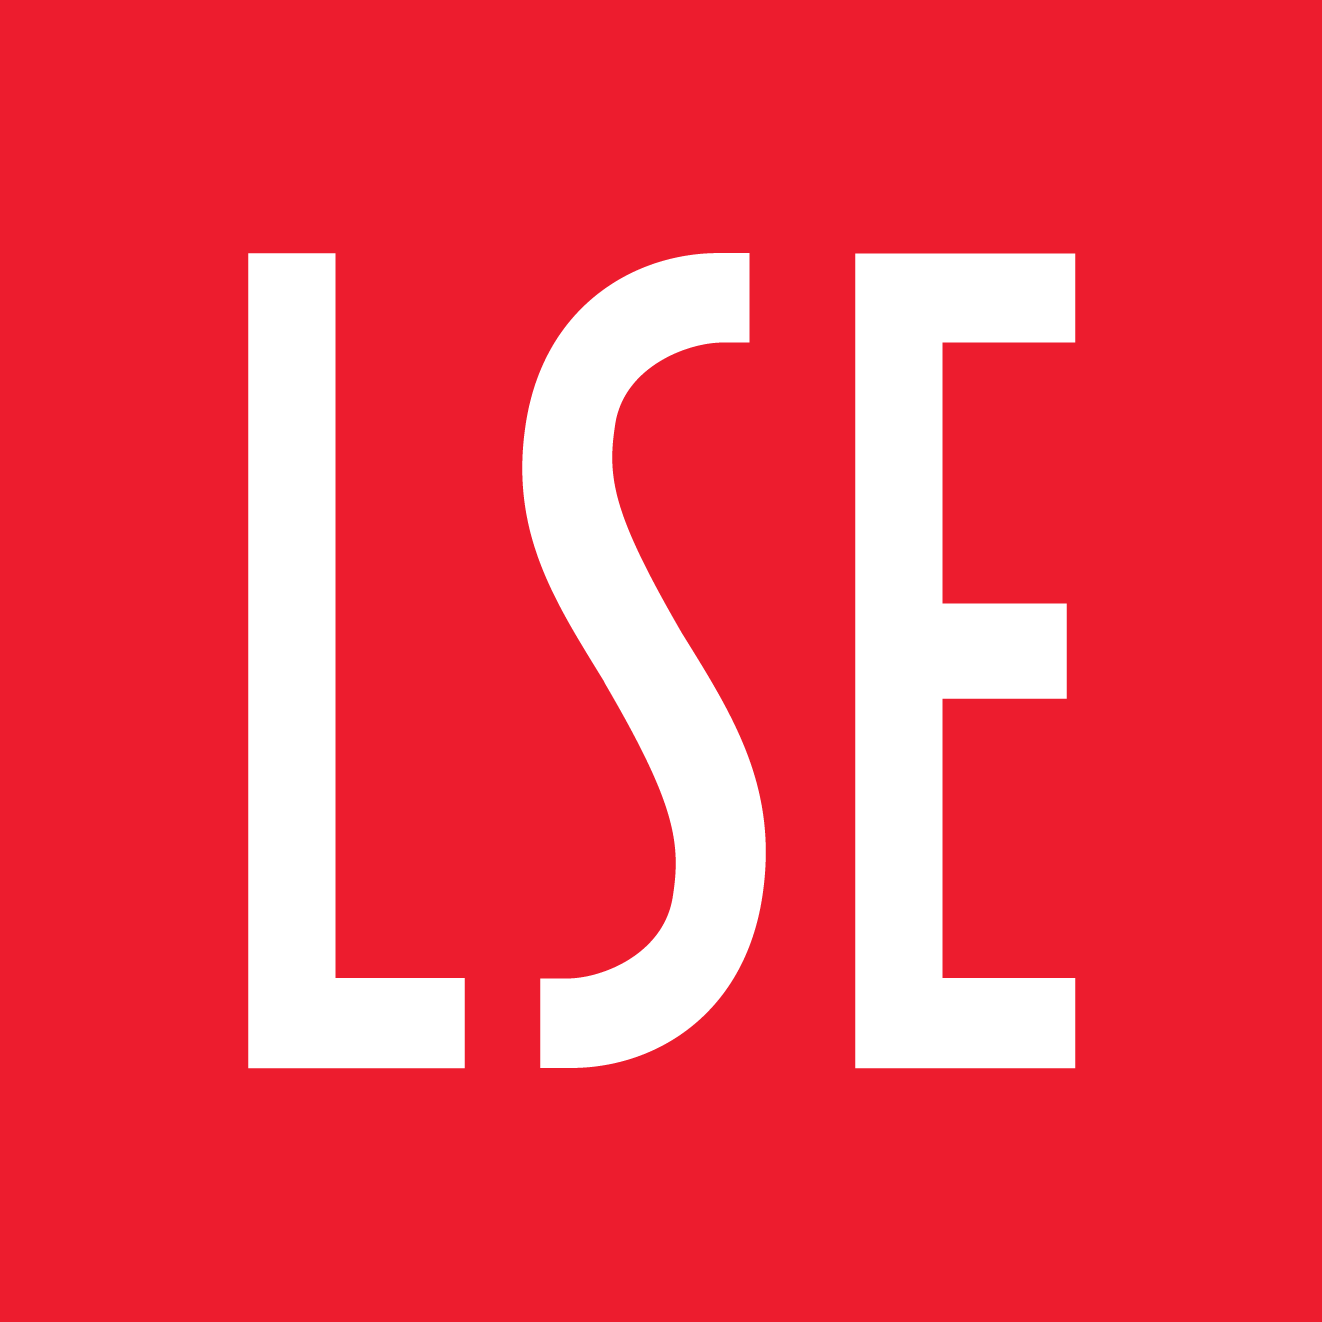 LSE logo red